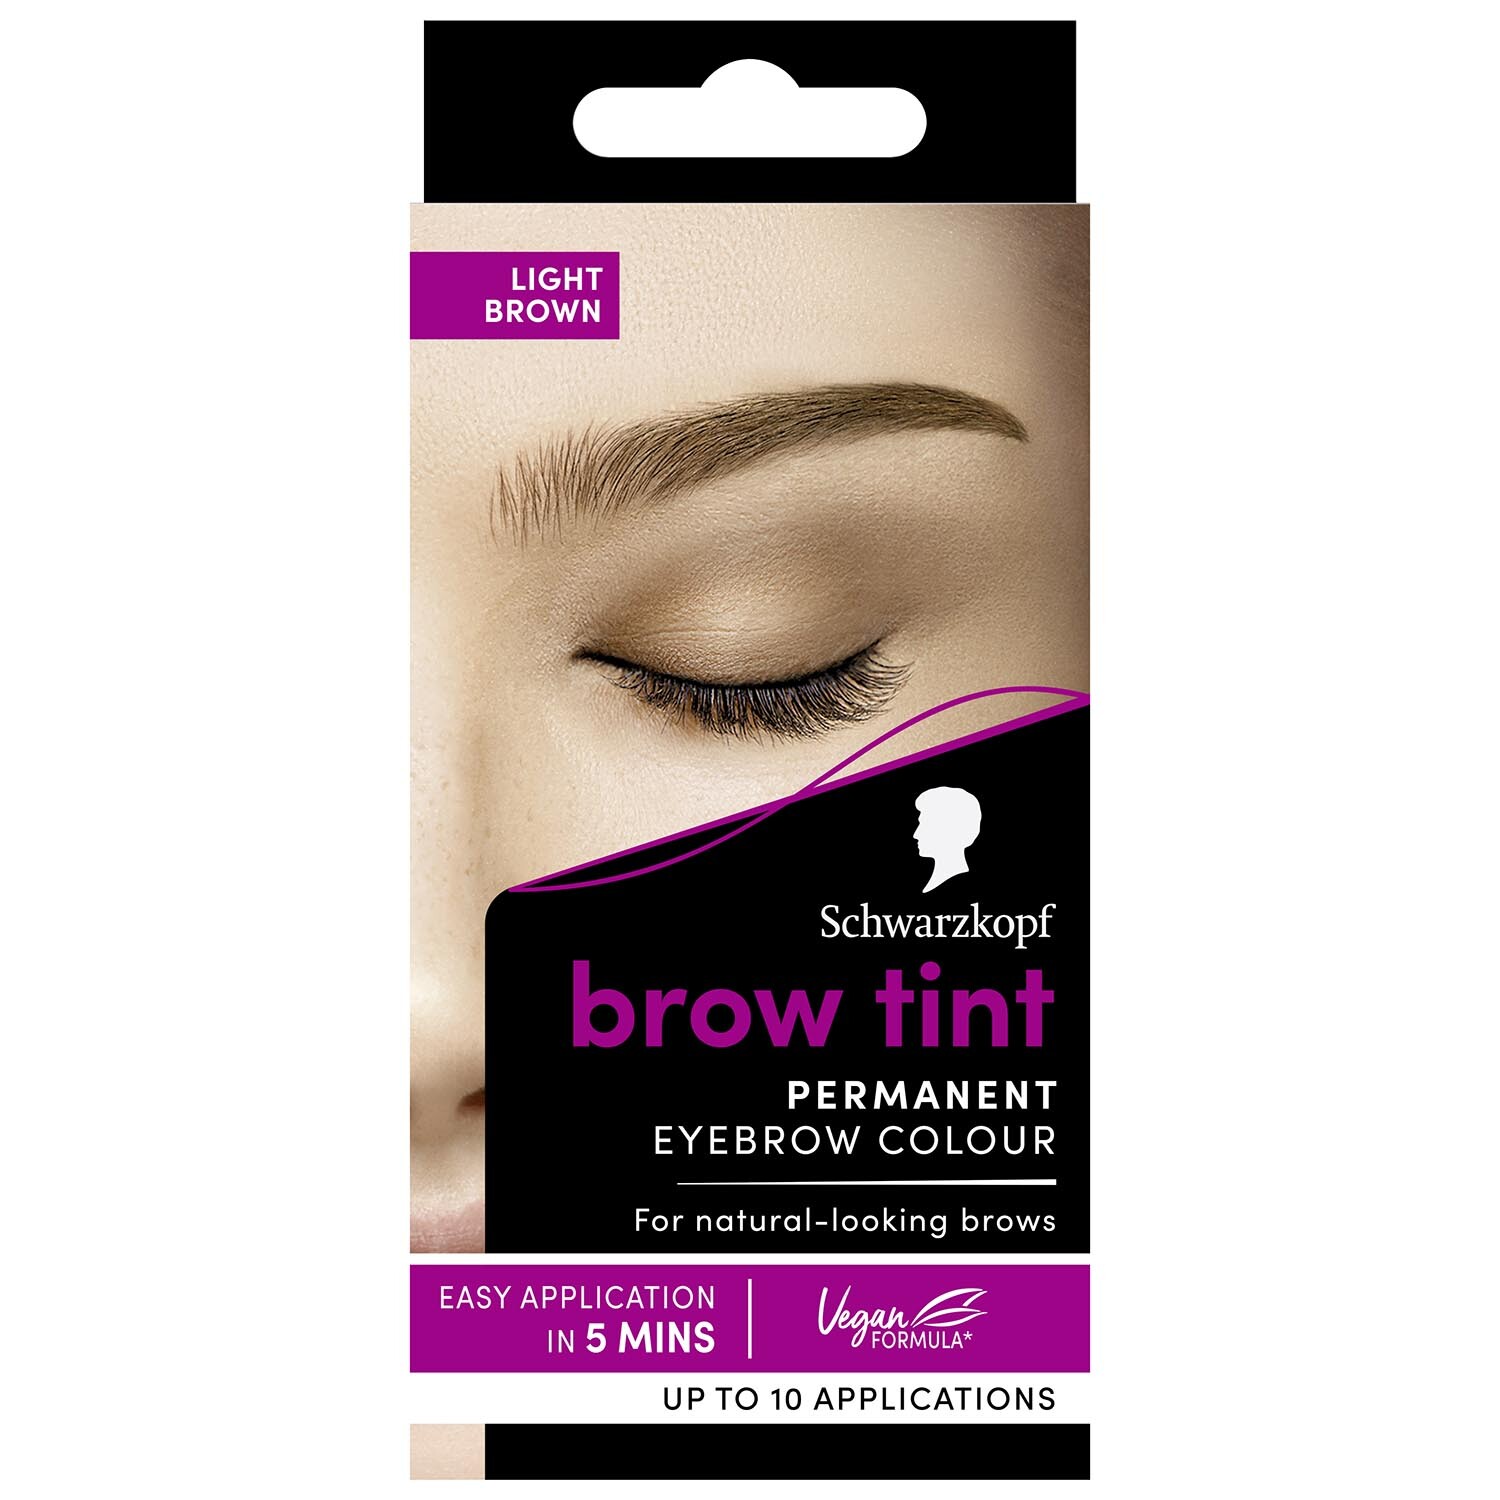 Schwarzkopf Brow Tint - Light Brown Image